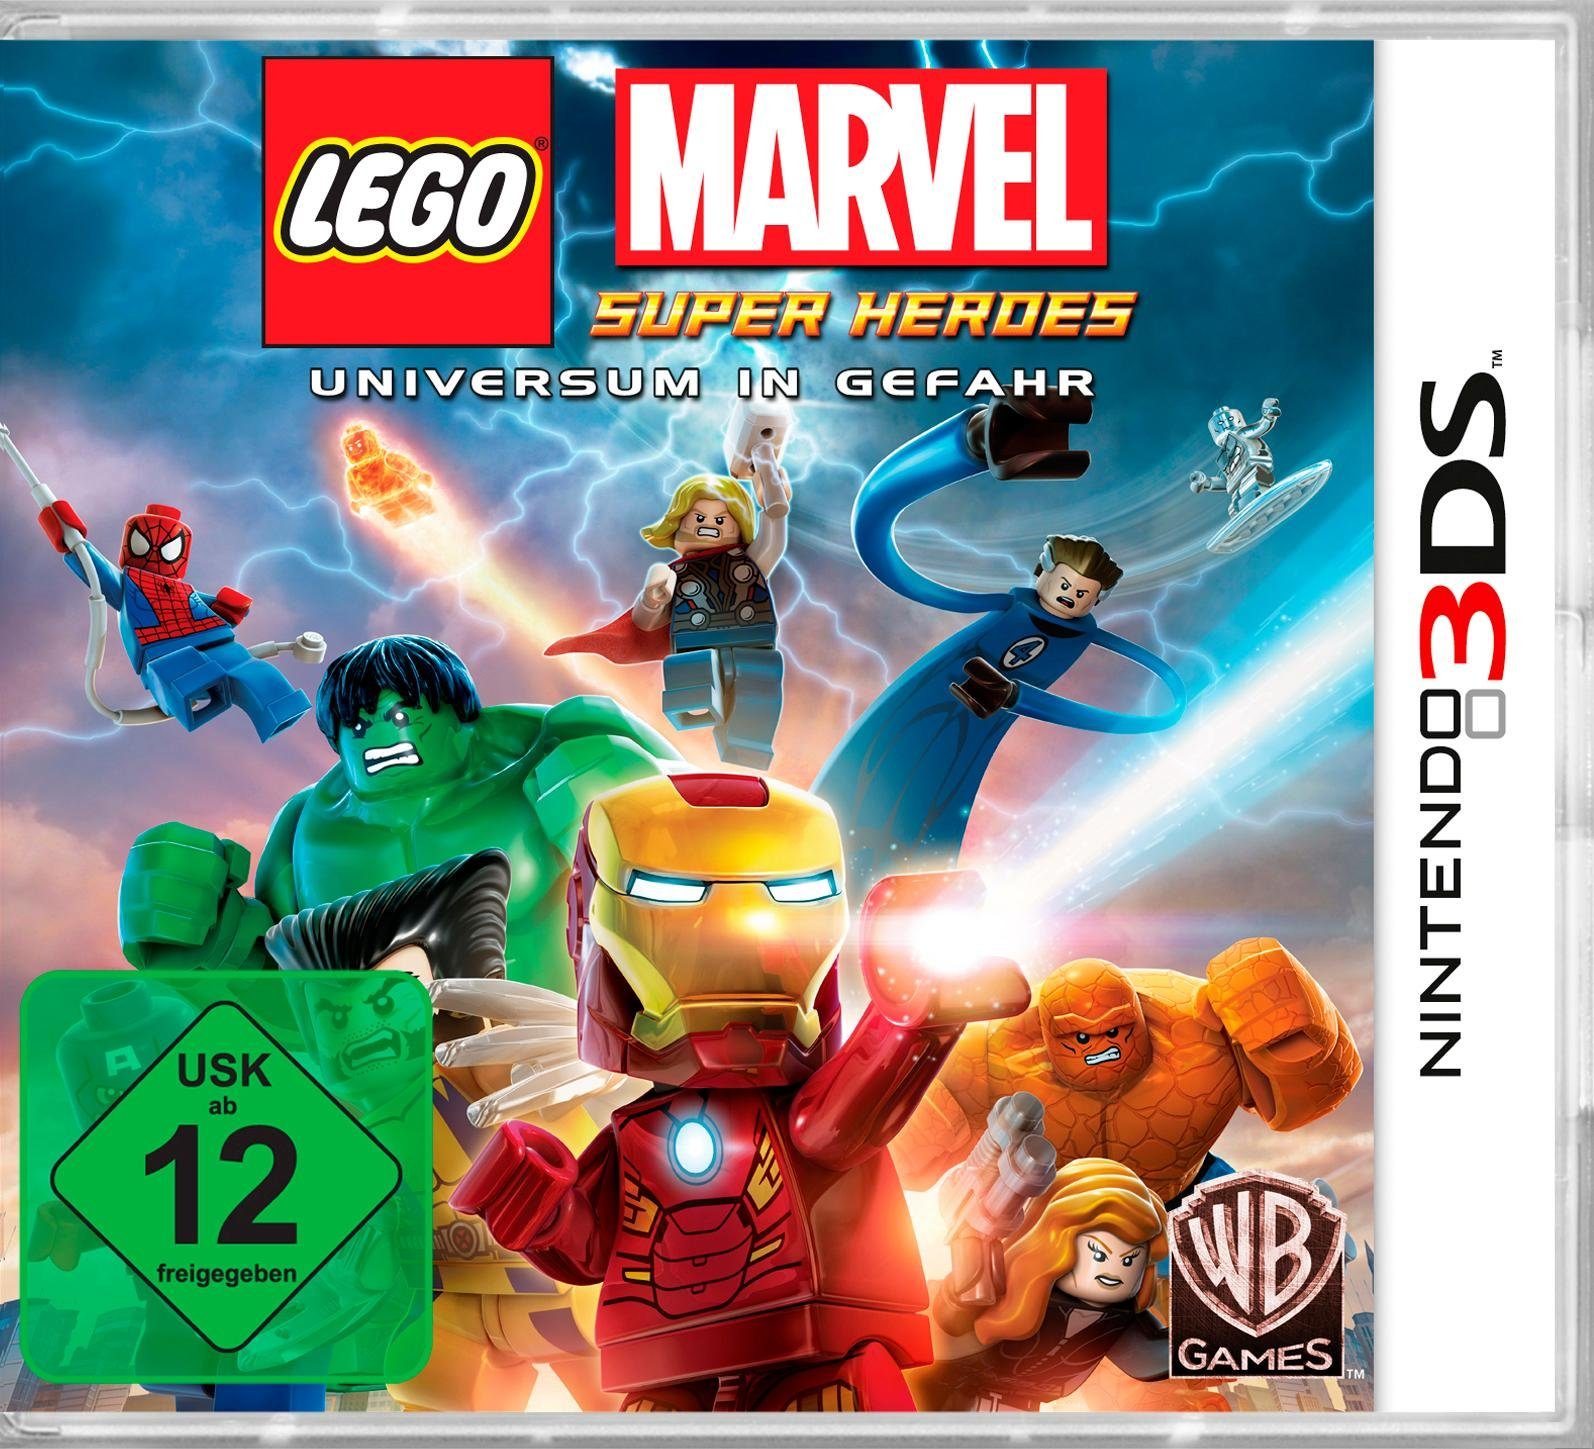 Pyramide Software Nintendo 3DS, Super Heroes Lego Marvel